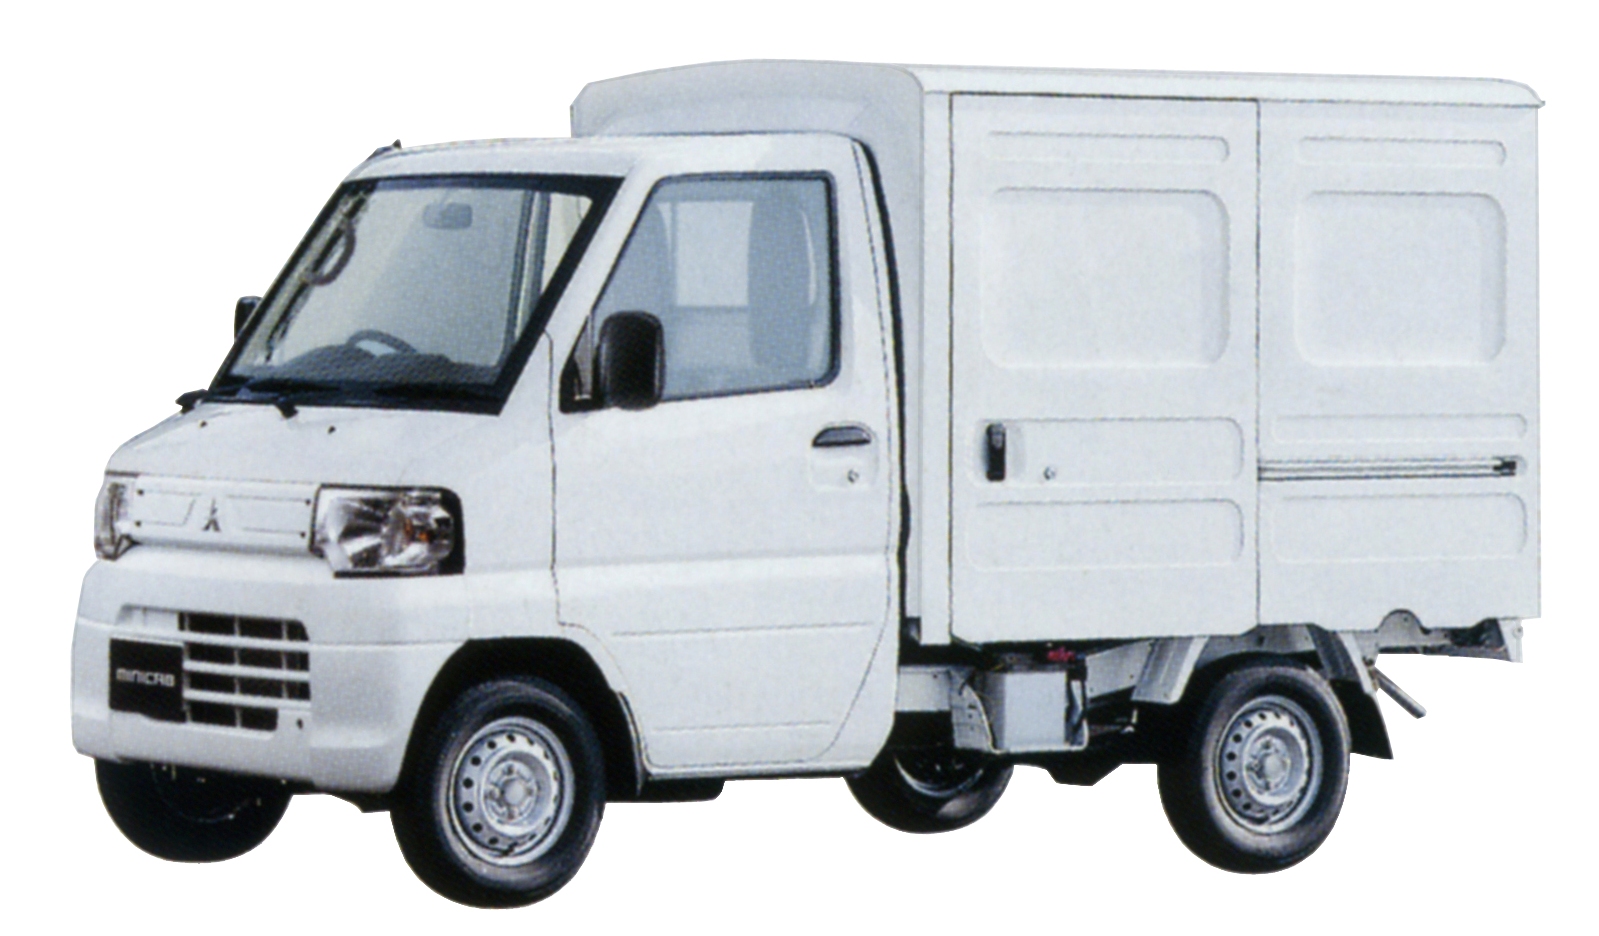 Купить микрогрузовик в хабаровске. Mitsubishi Minicab 2004 рефрижератор. Тойота Дюна 1.5 тонны фургон. Toyota TOYOACE 4wd грузовик. Митсубиси Миникаб грузовик.